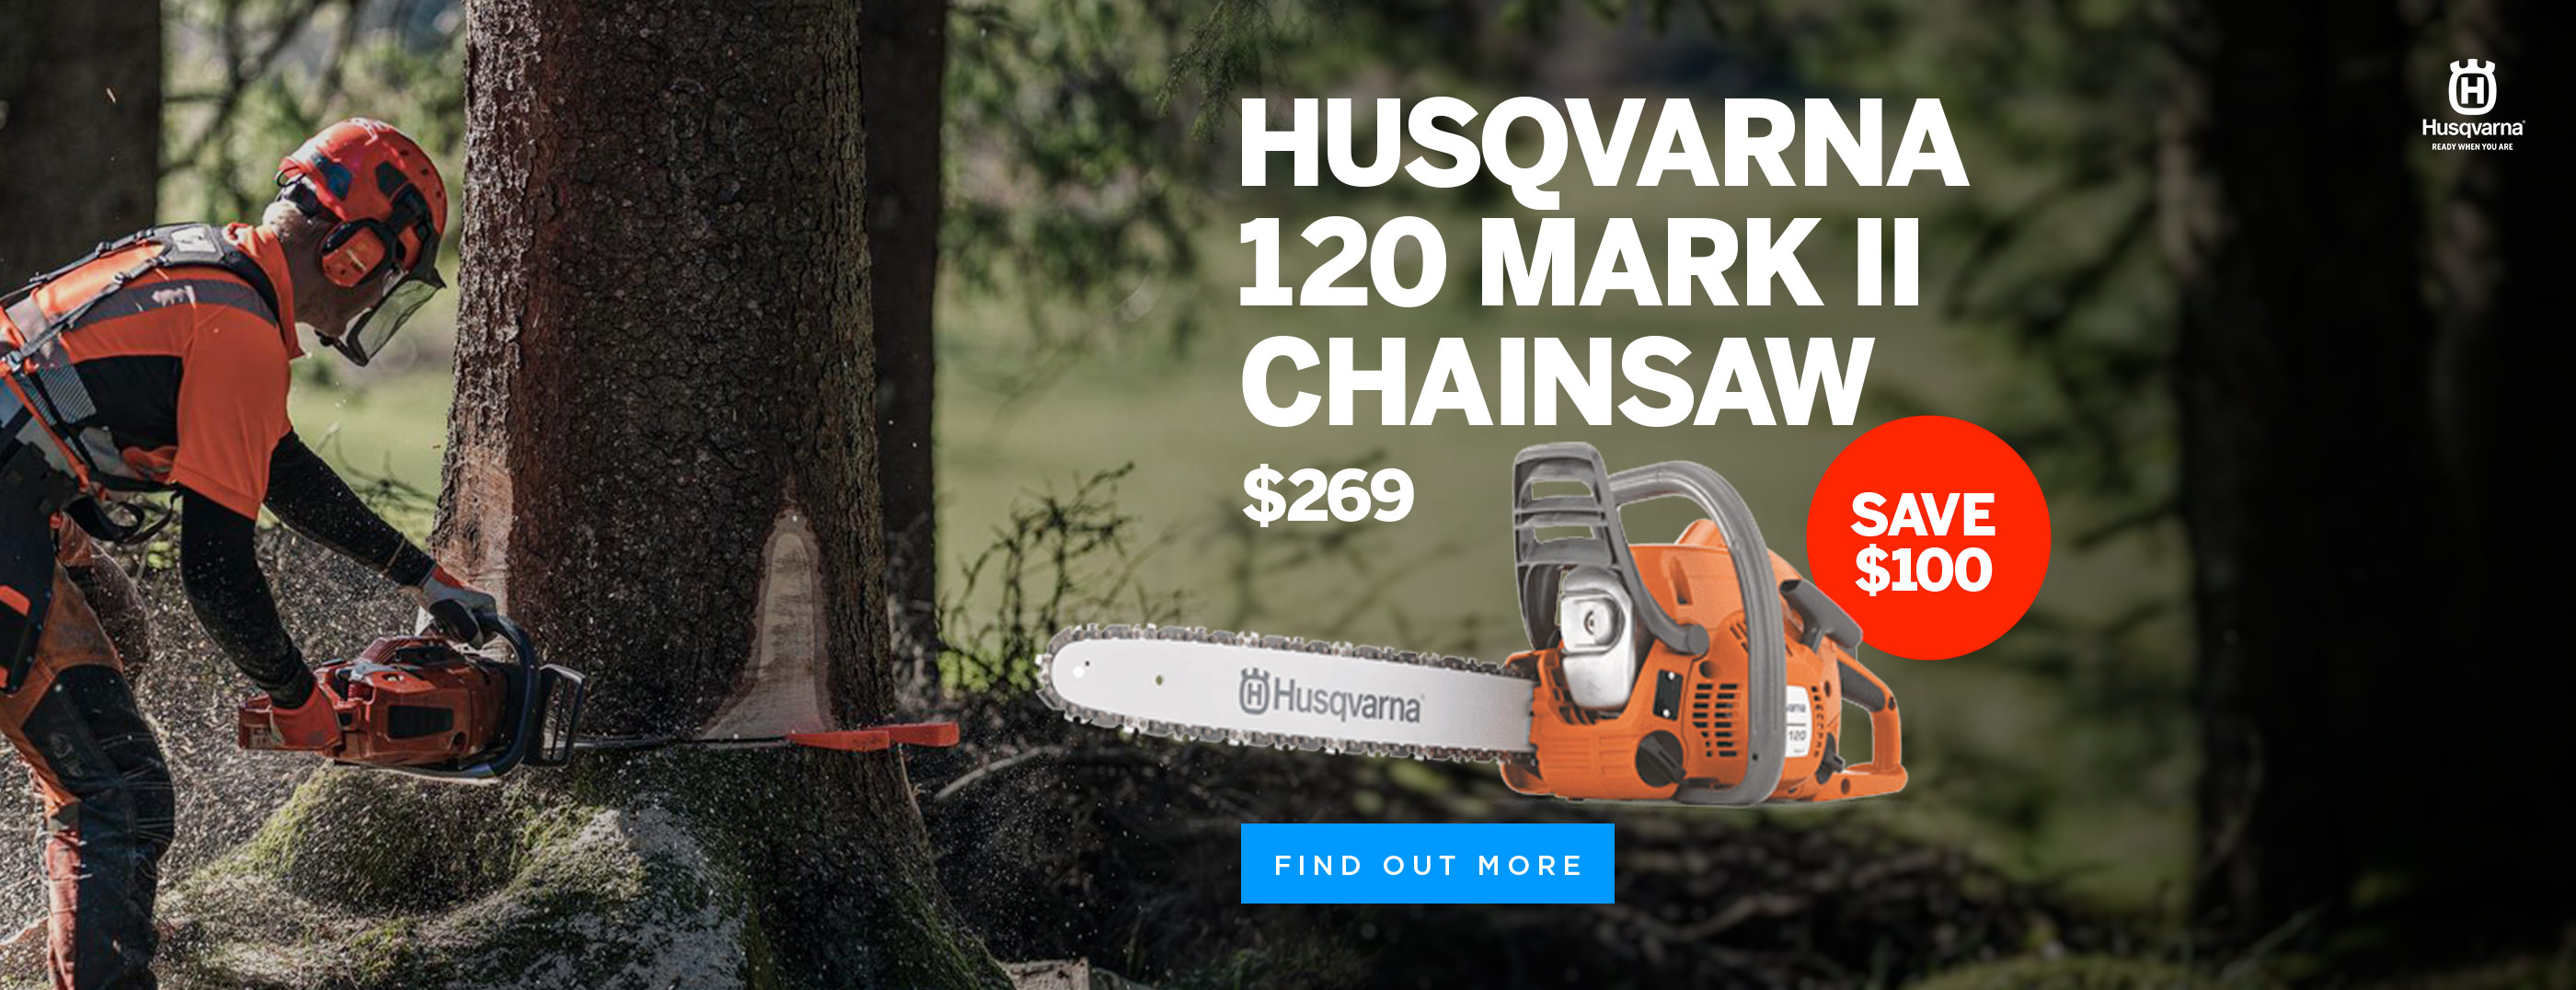 Husqvarna Mark II Chainsaw, Save $100!